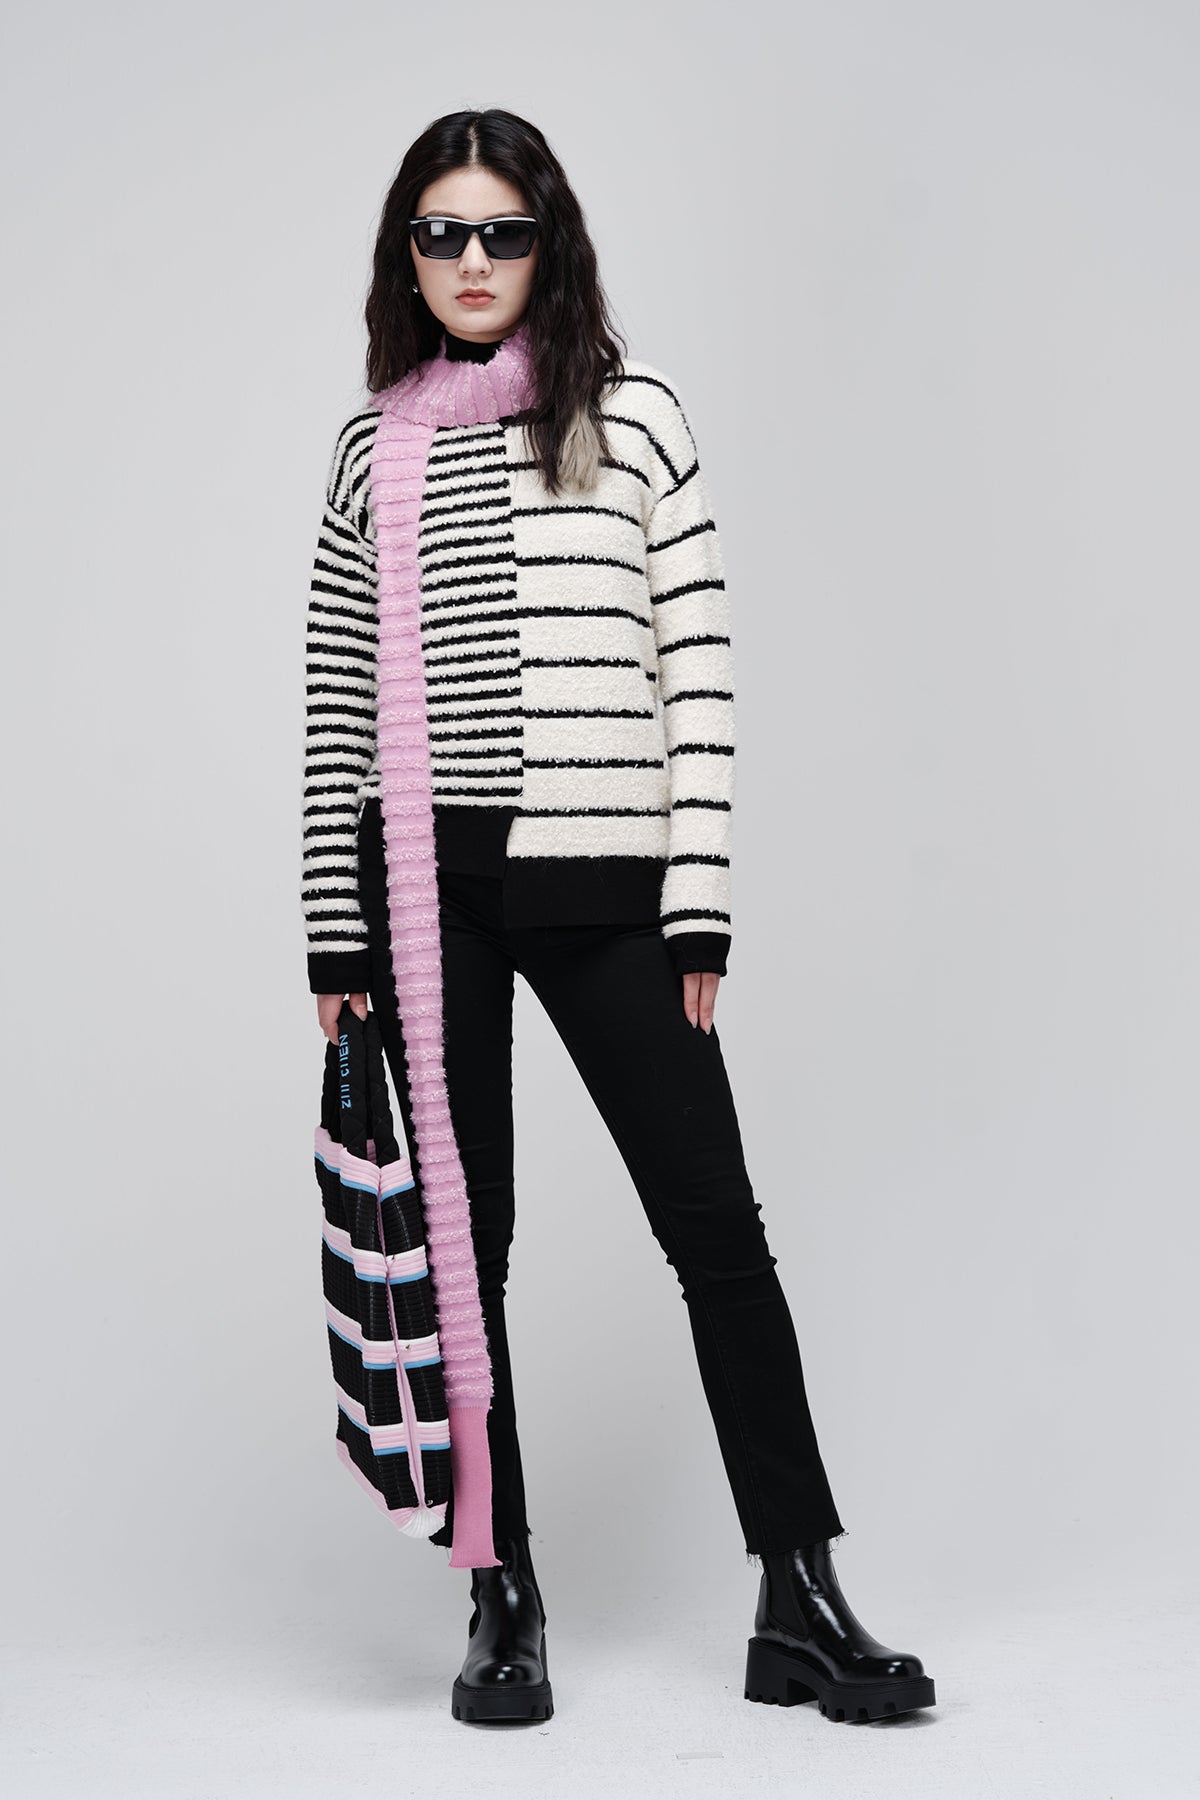 ZI II CI IEN | Black And White Asymmetric Knitted Sweater